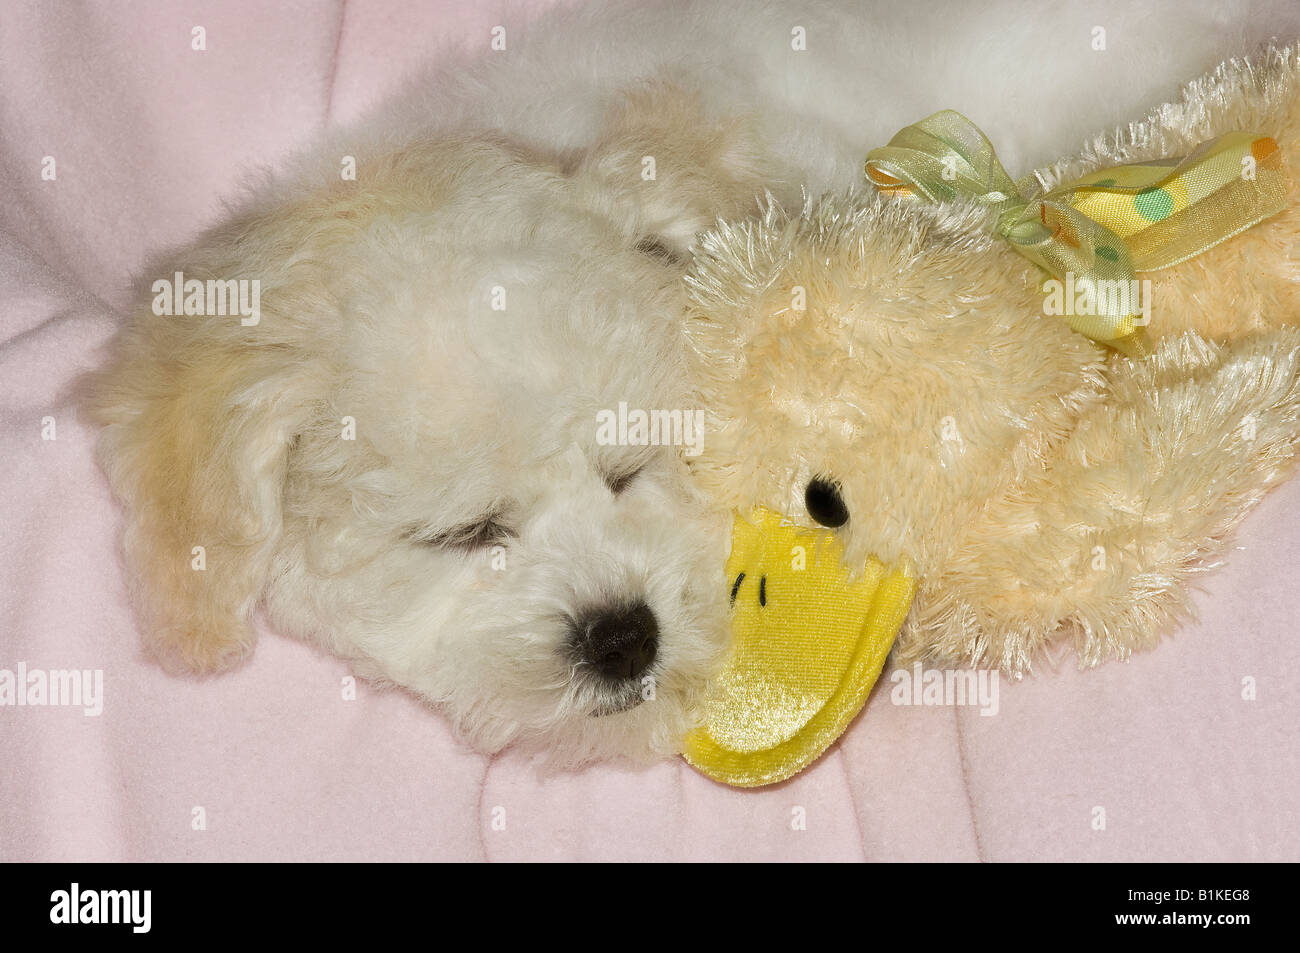 Sleeping Bichon Frise puppy. Stock Photo